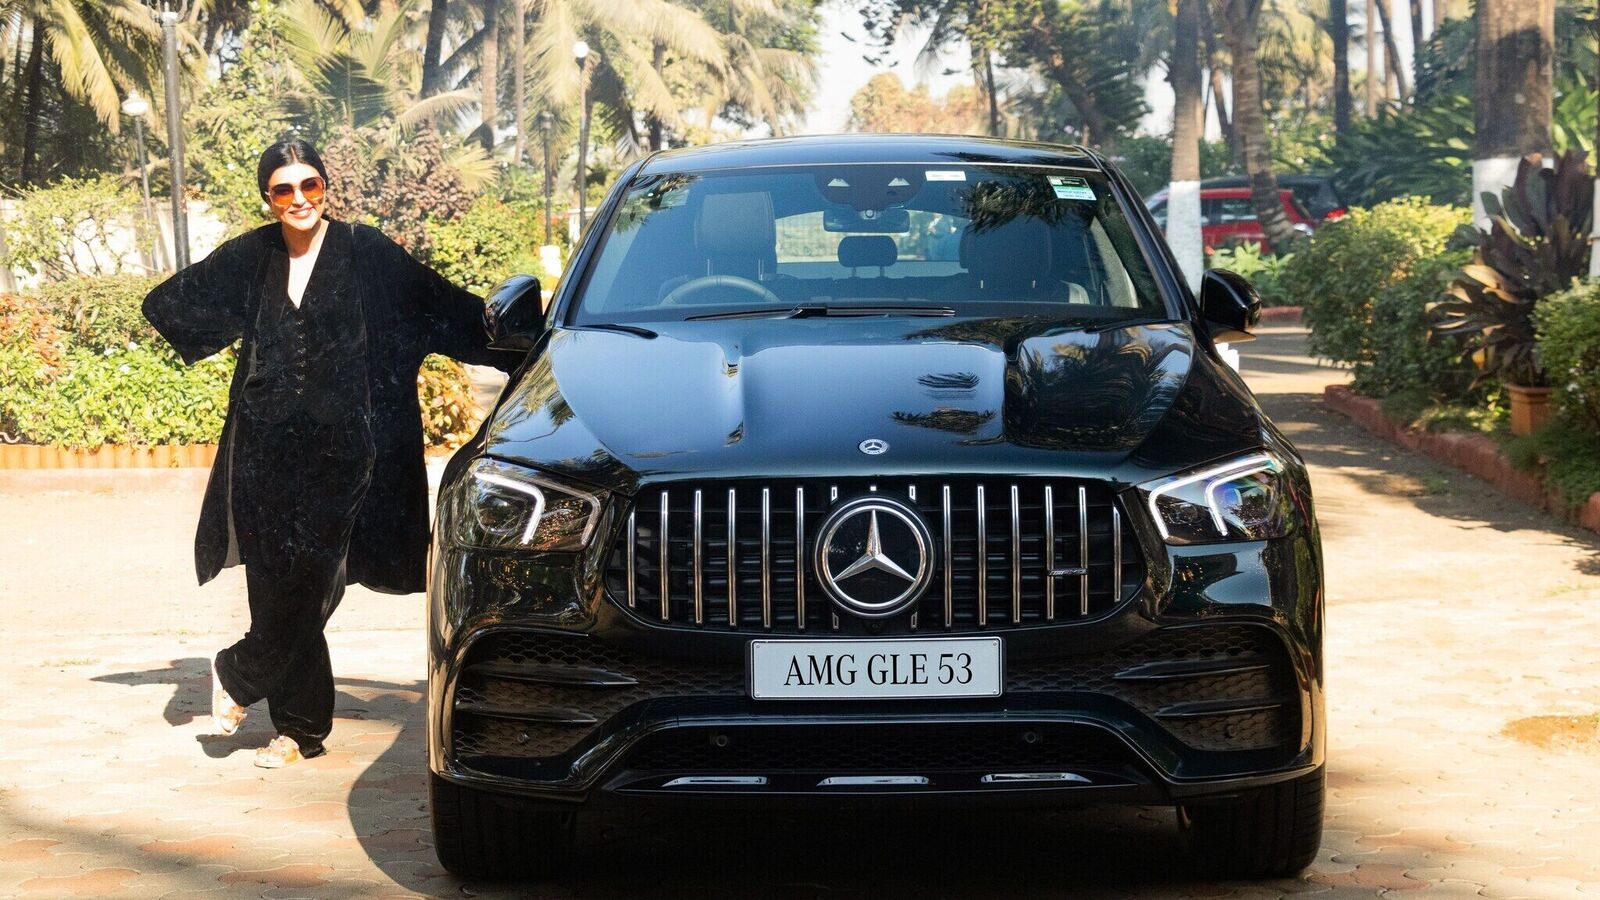 Actor Sushmita Sen brings home the Mercedes-AMG GLE 53 worth ₹1.63 crore